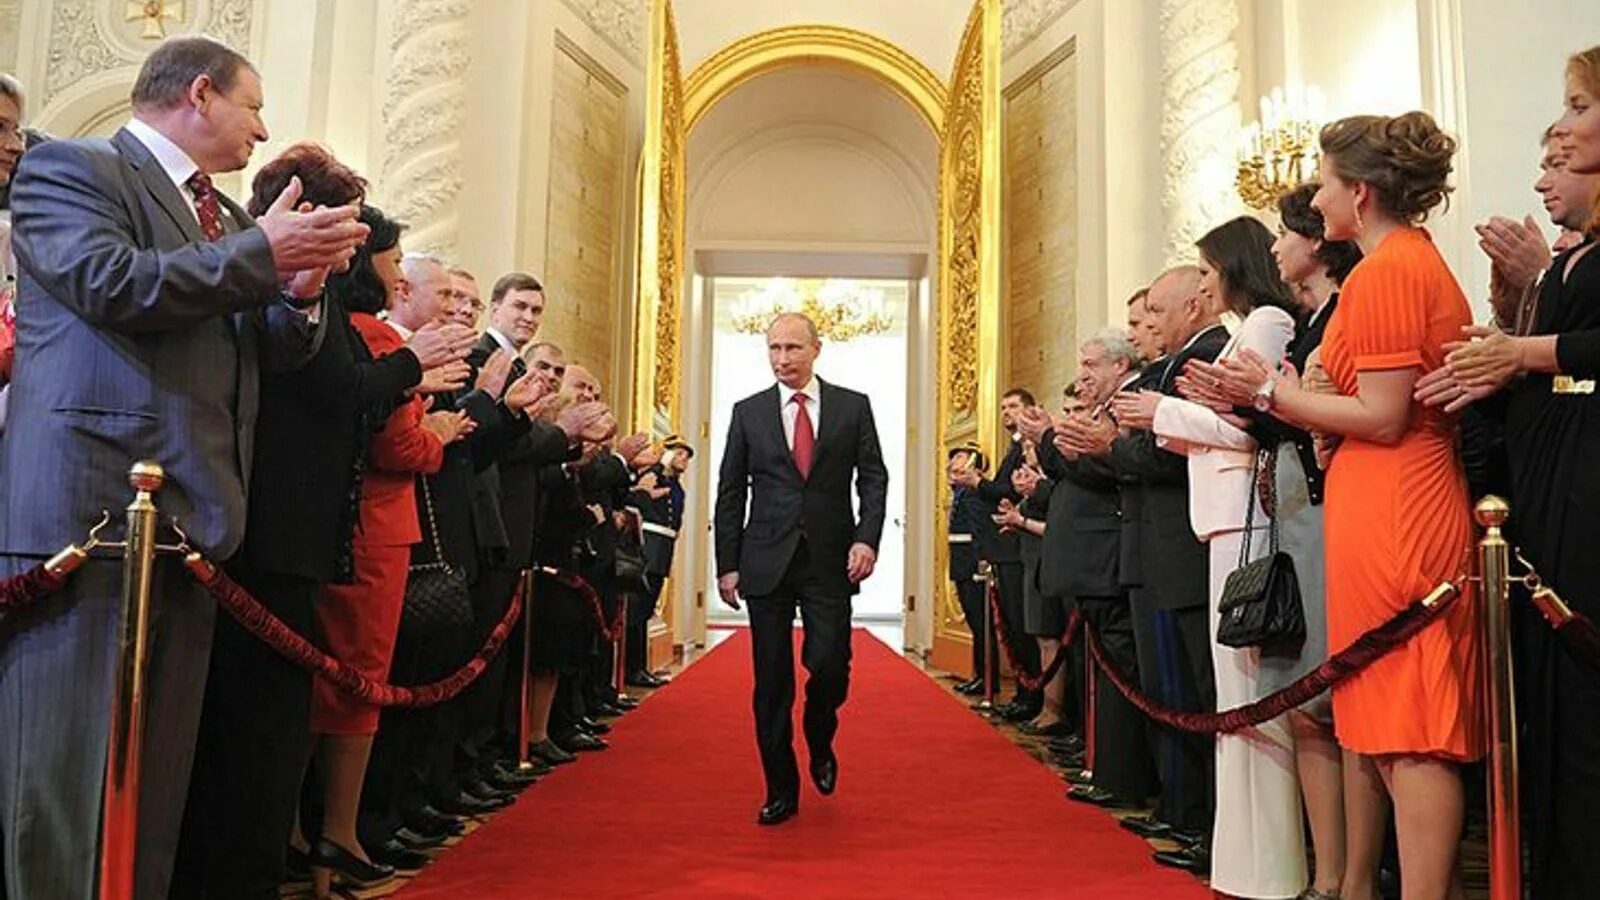 7 май 2012 года. Инаугурация Владимира Путина 2018. Инаугурация президента РФ 2012.